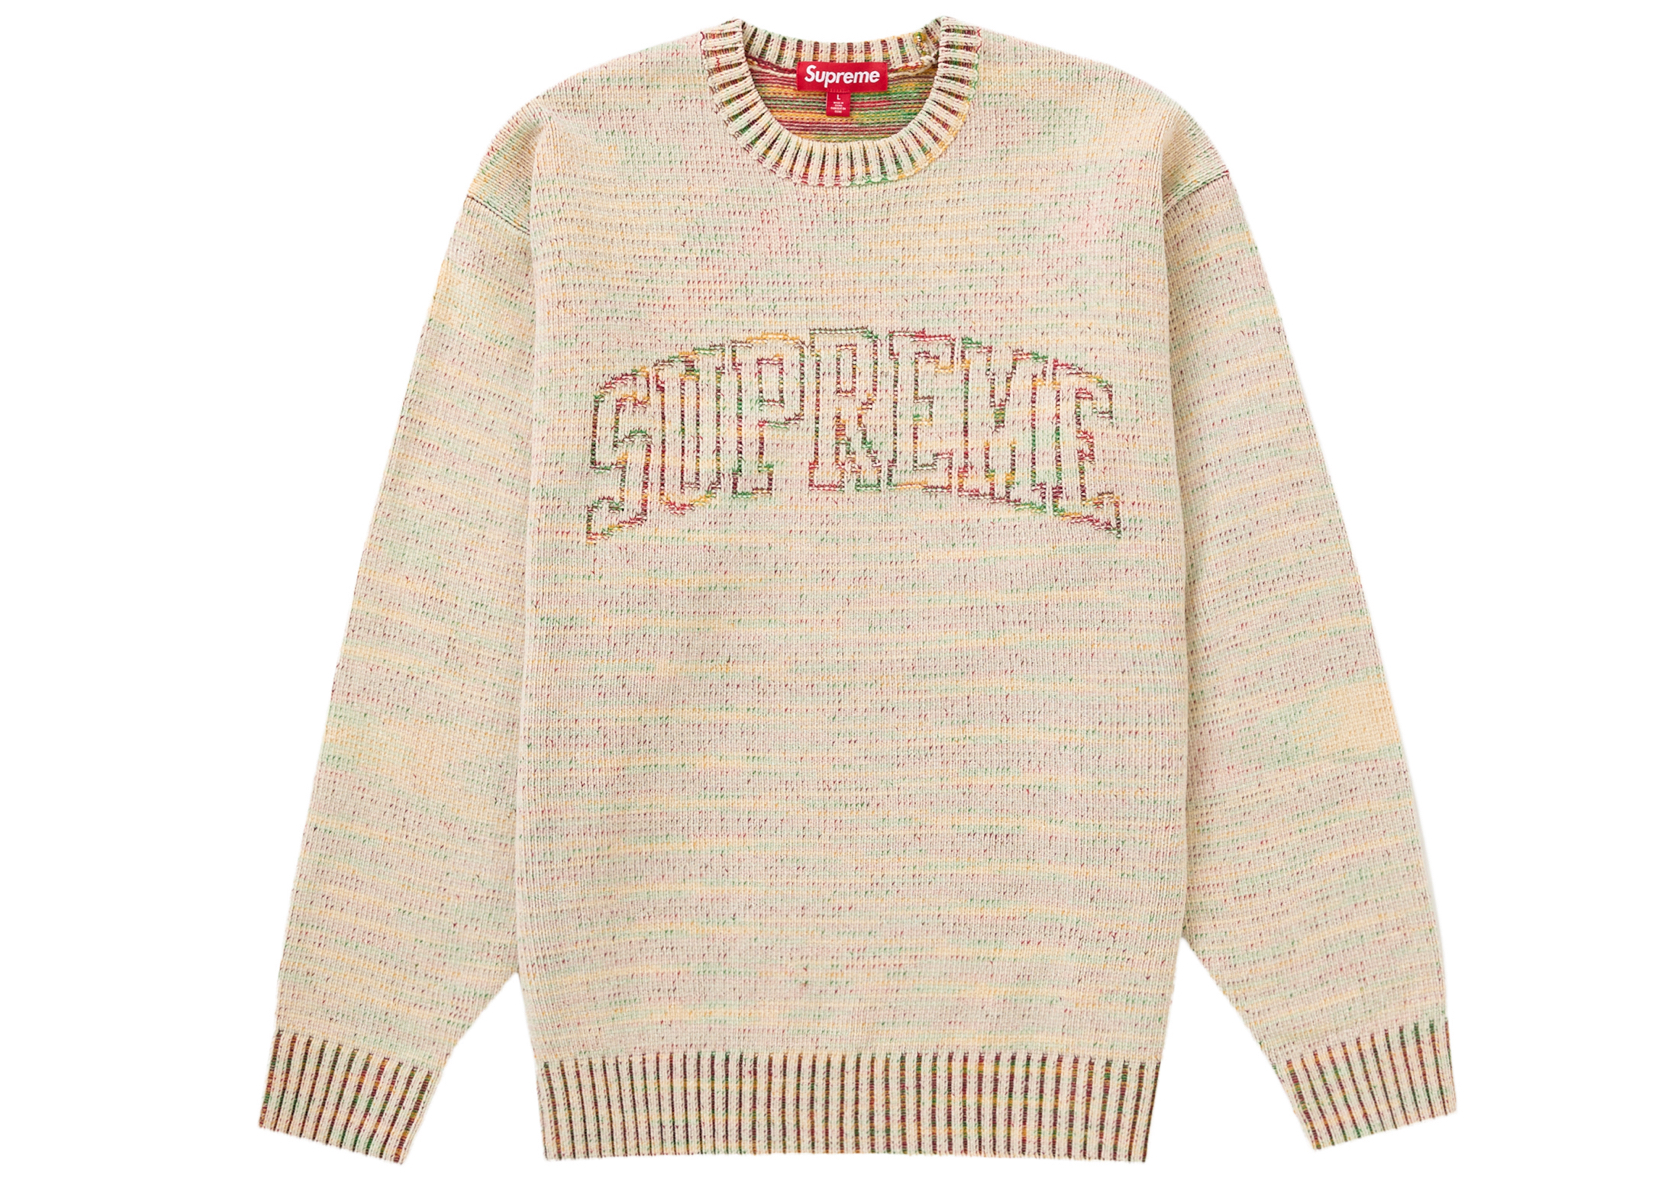 supremeSupreme Contrast Arc Sweater